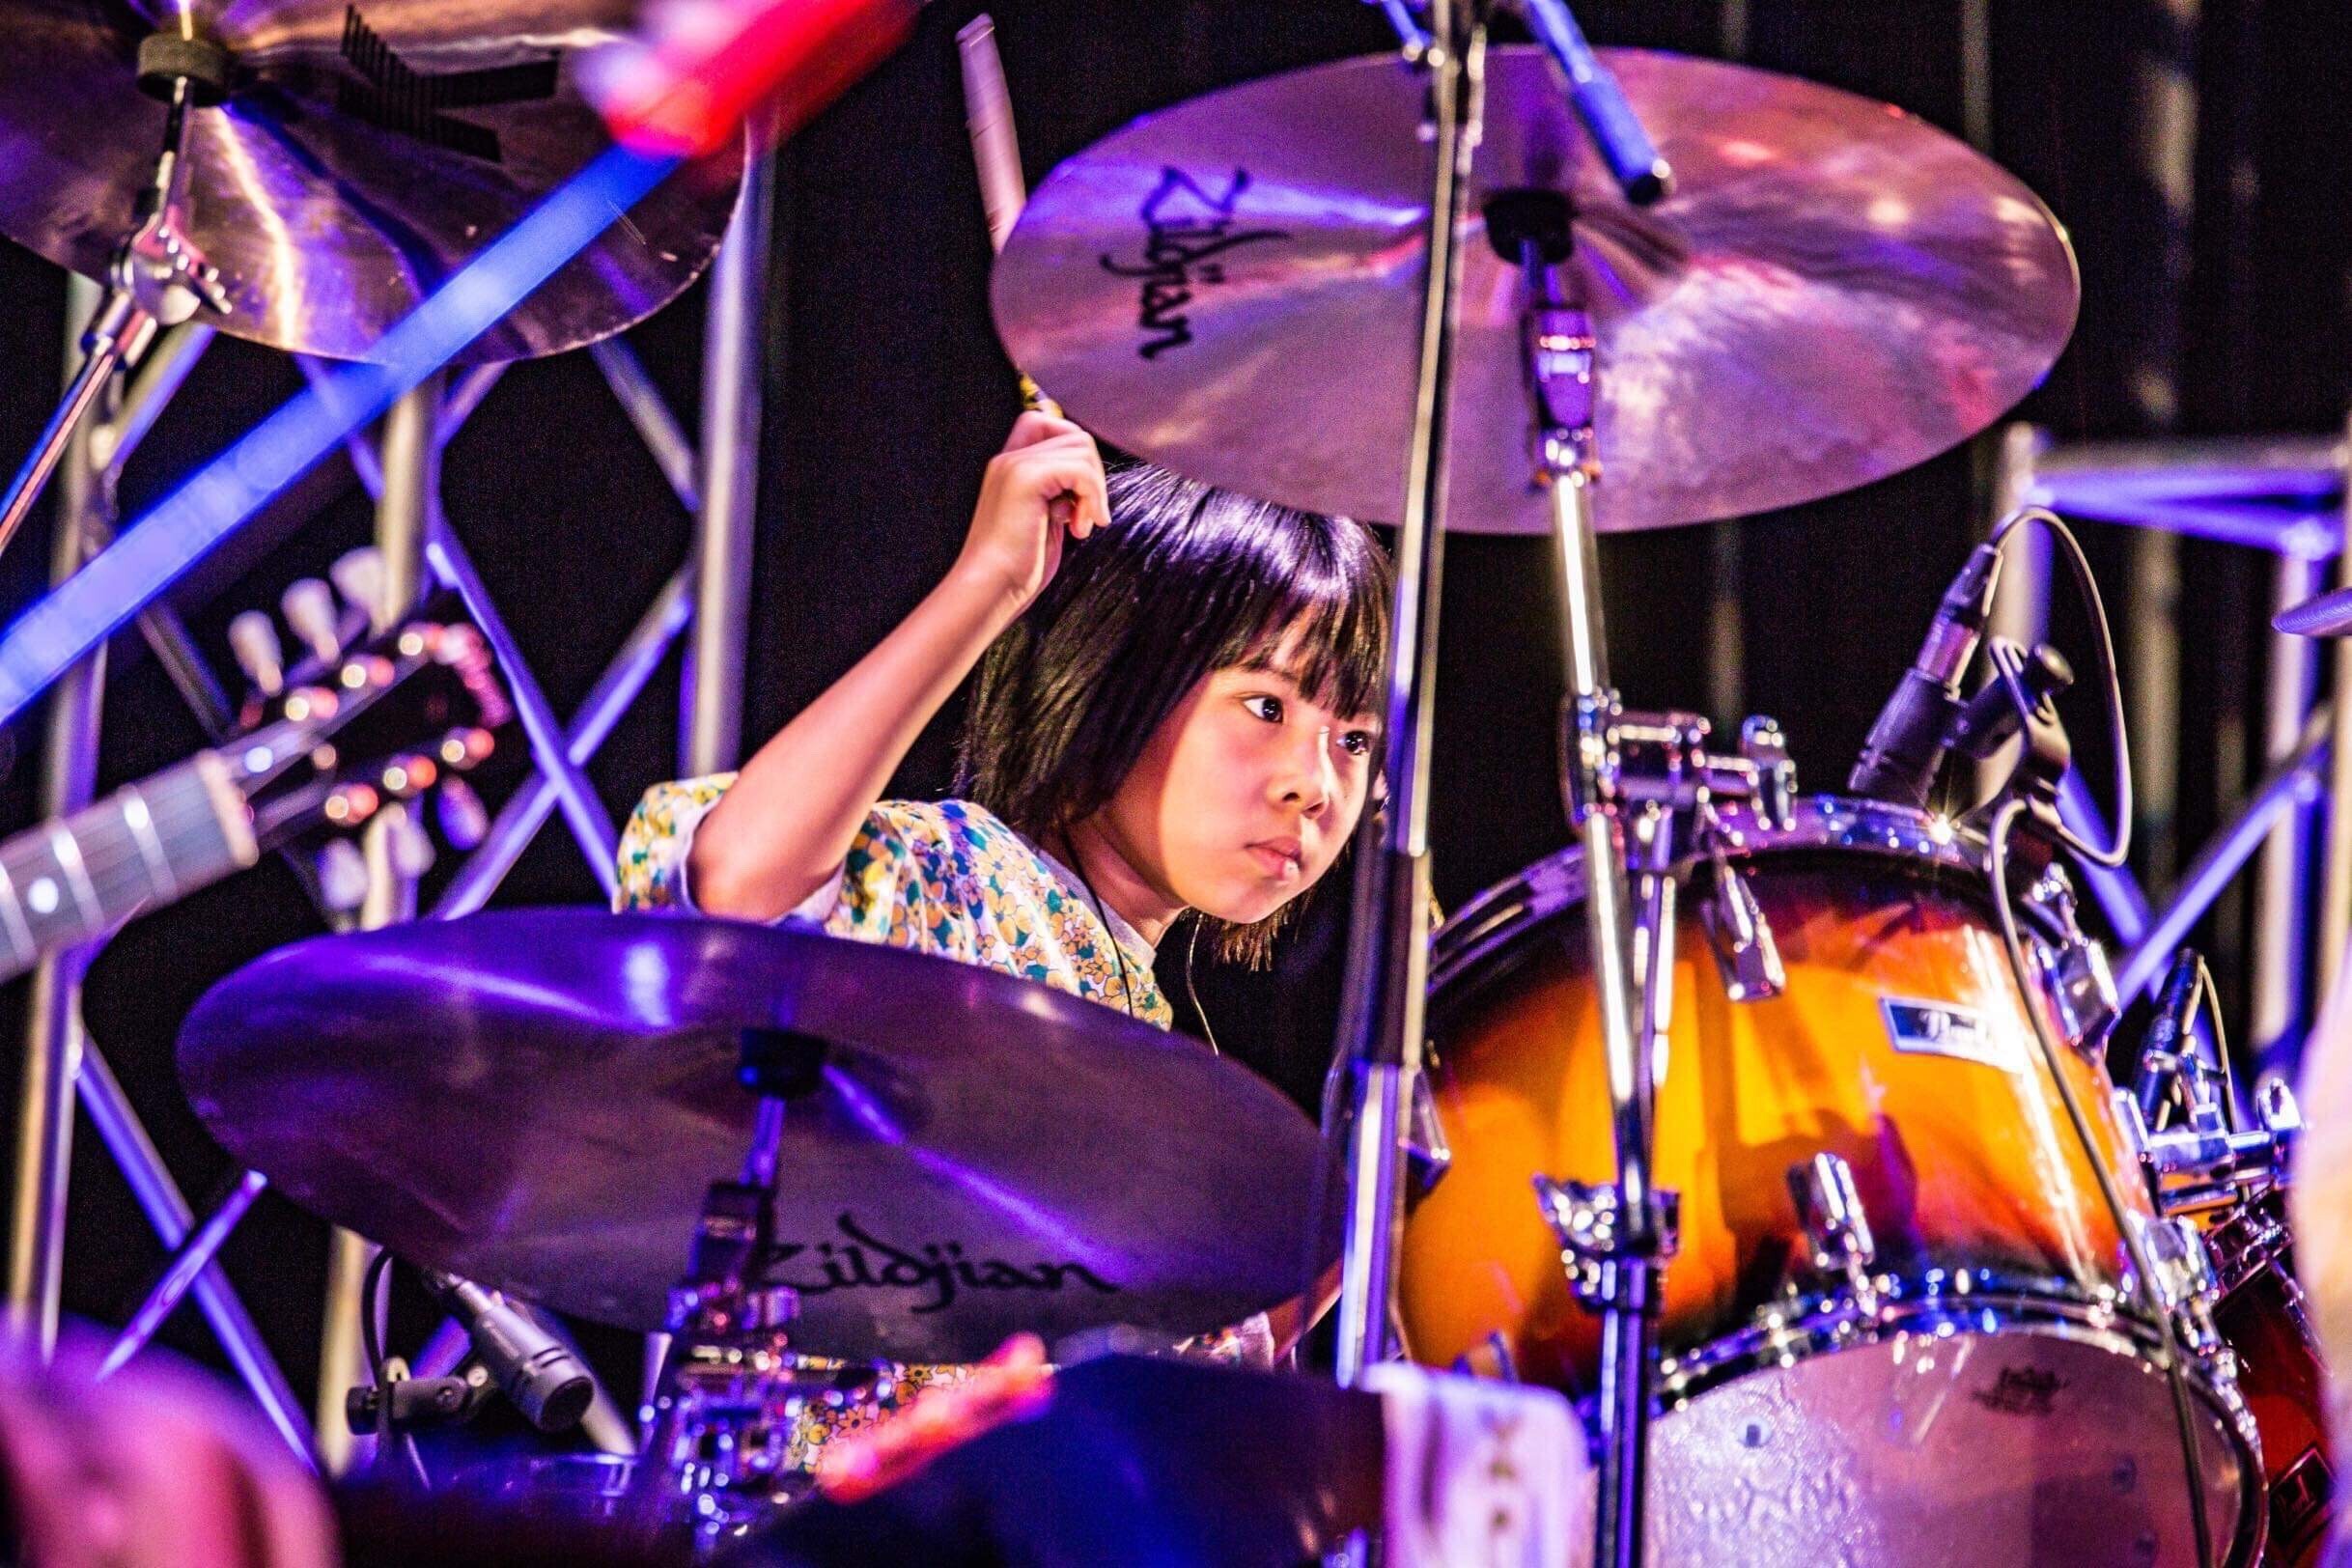 Yoyoka Soma is a drumming prodigy whose skills have been praised by Led Zeppelin’s Robert Plant. Photo: courtesy of Yoyoka Soma